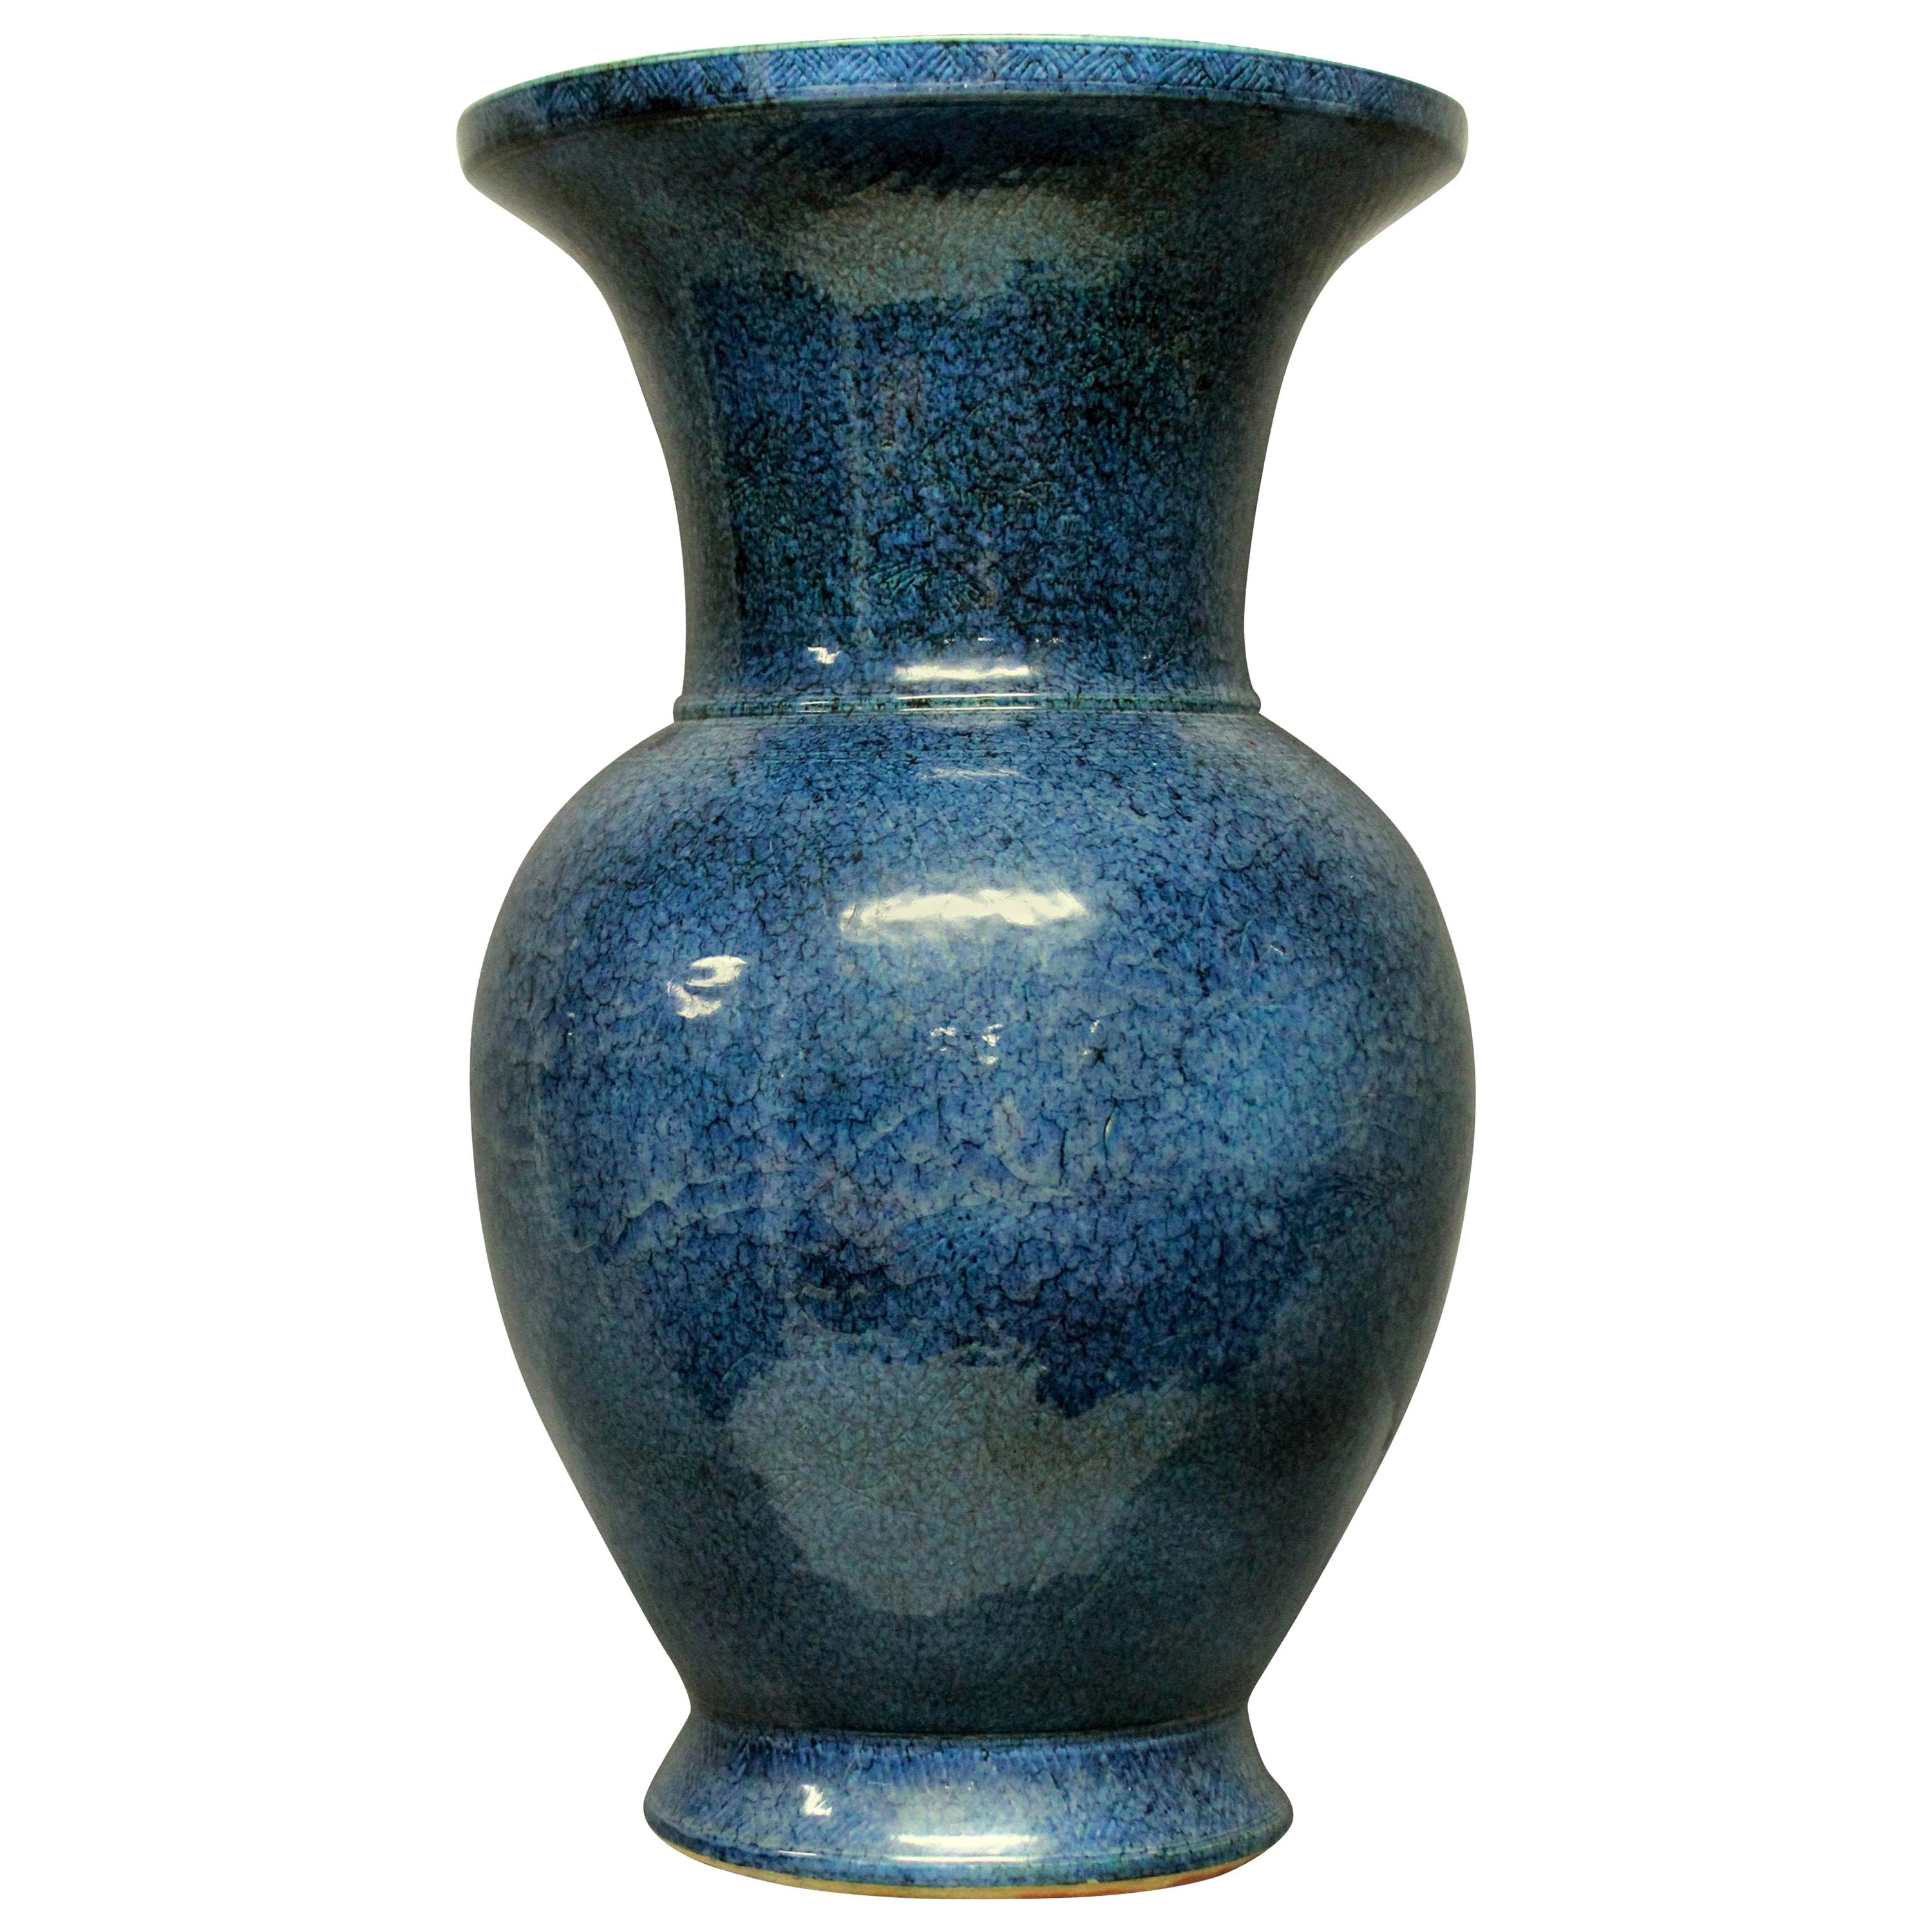 Very Large and Impressive Blue Ground Chinese Vase